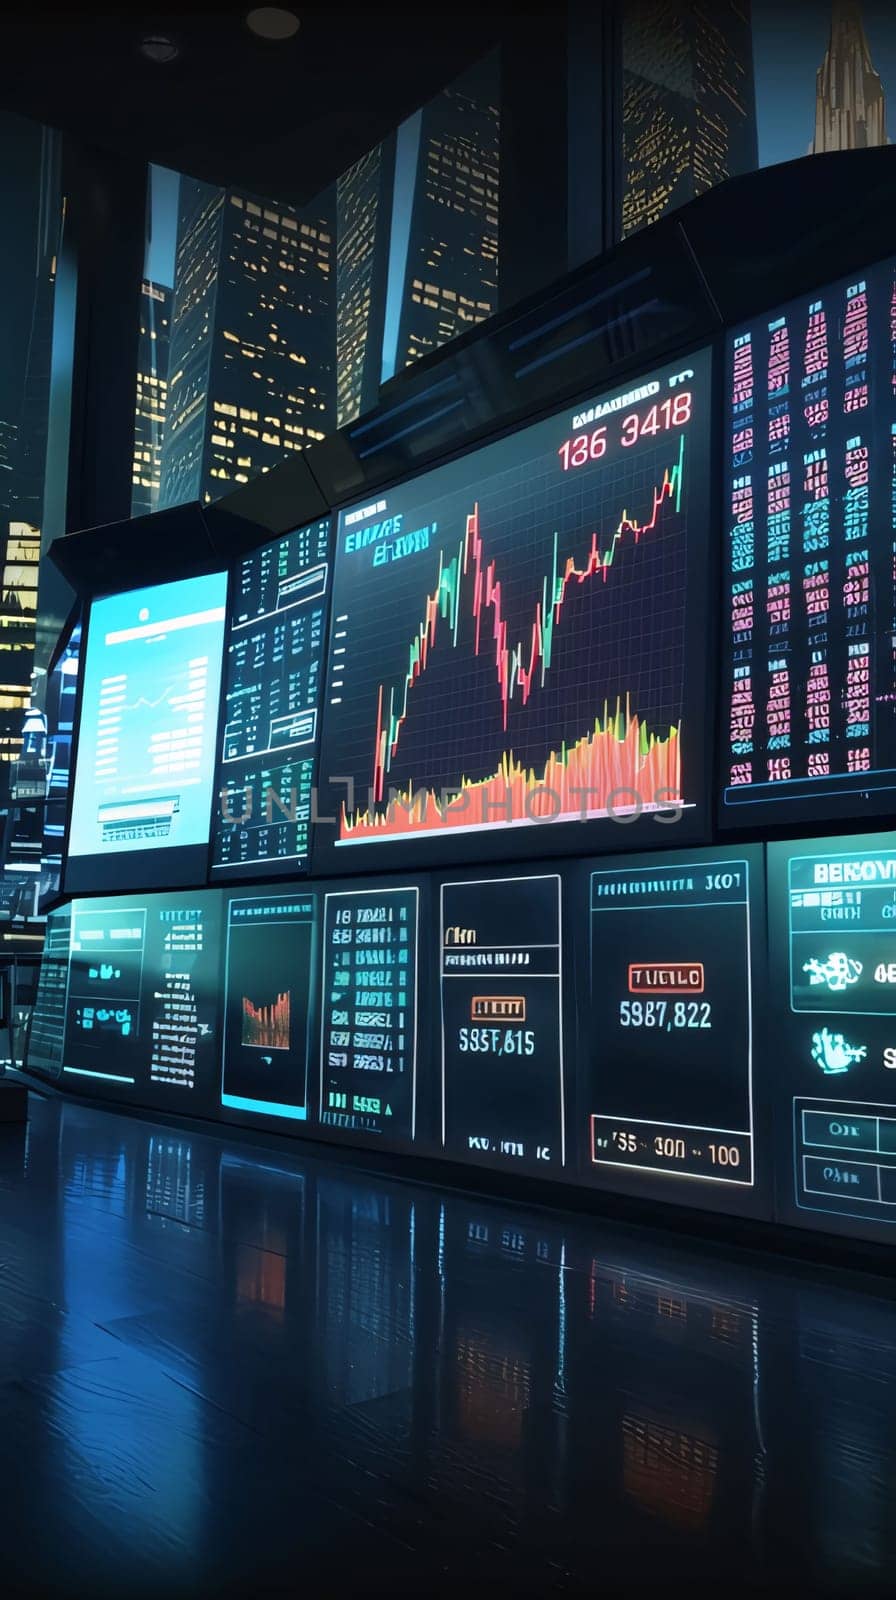 Stock Market: Stock market data on screen monitor in night city. 3D rendering